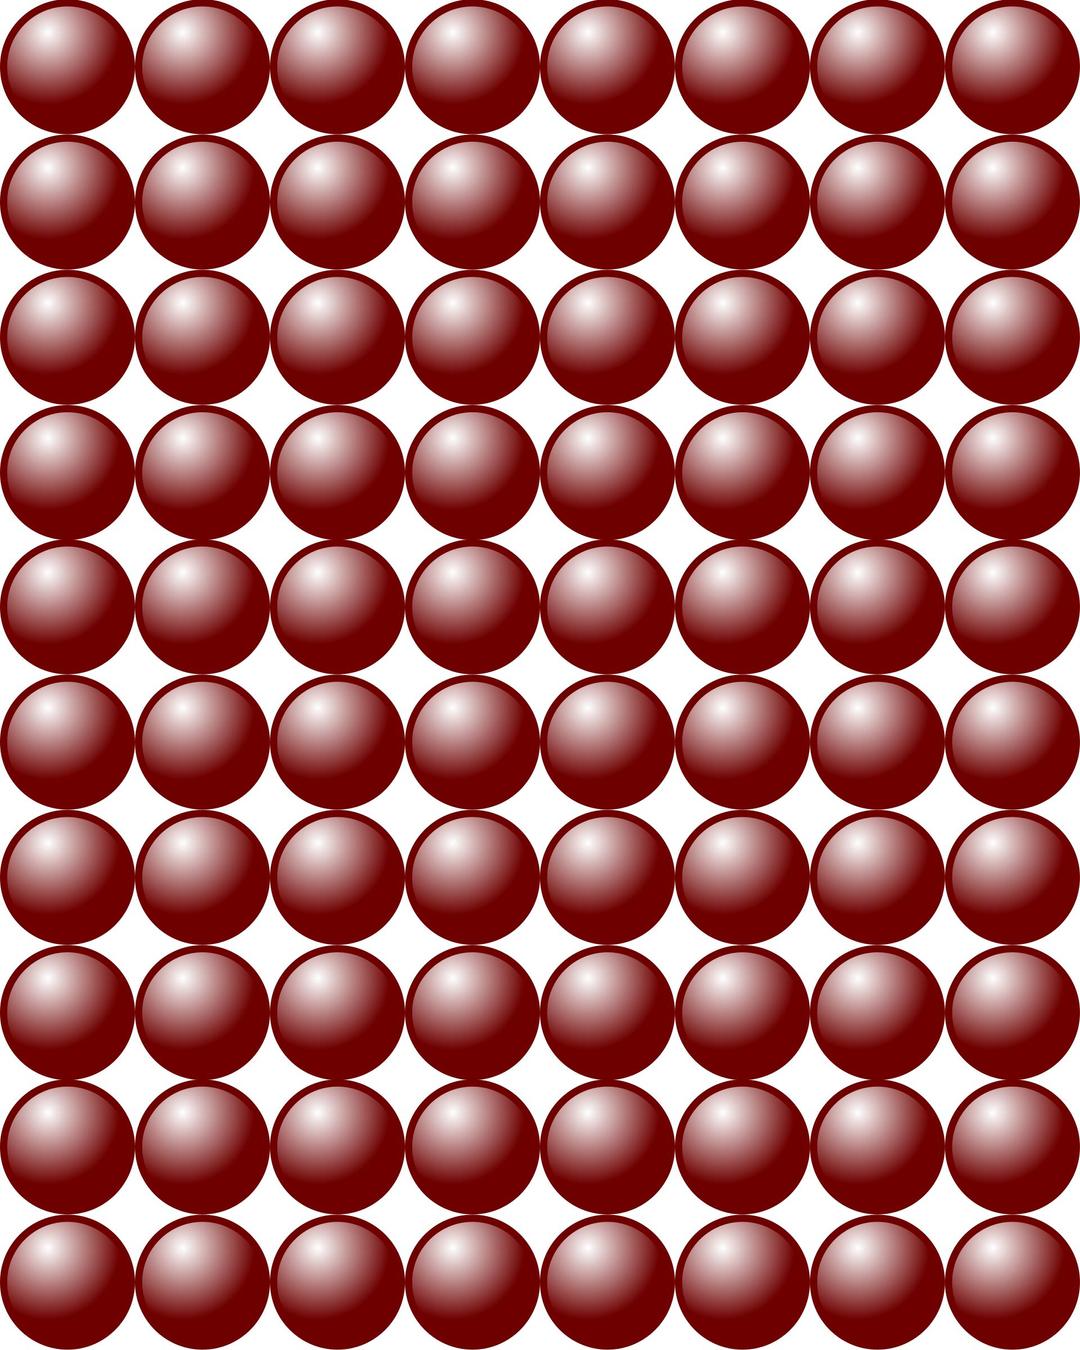 Beads quantitative picture for multiplication 10x8 png transparent